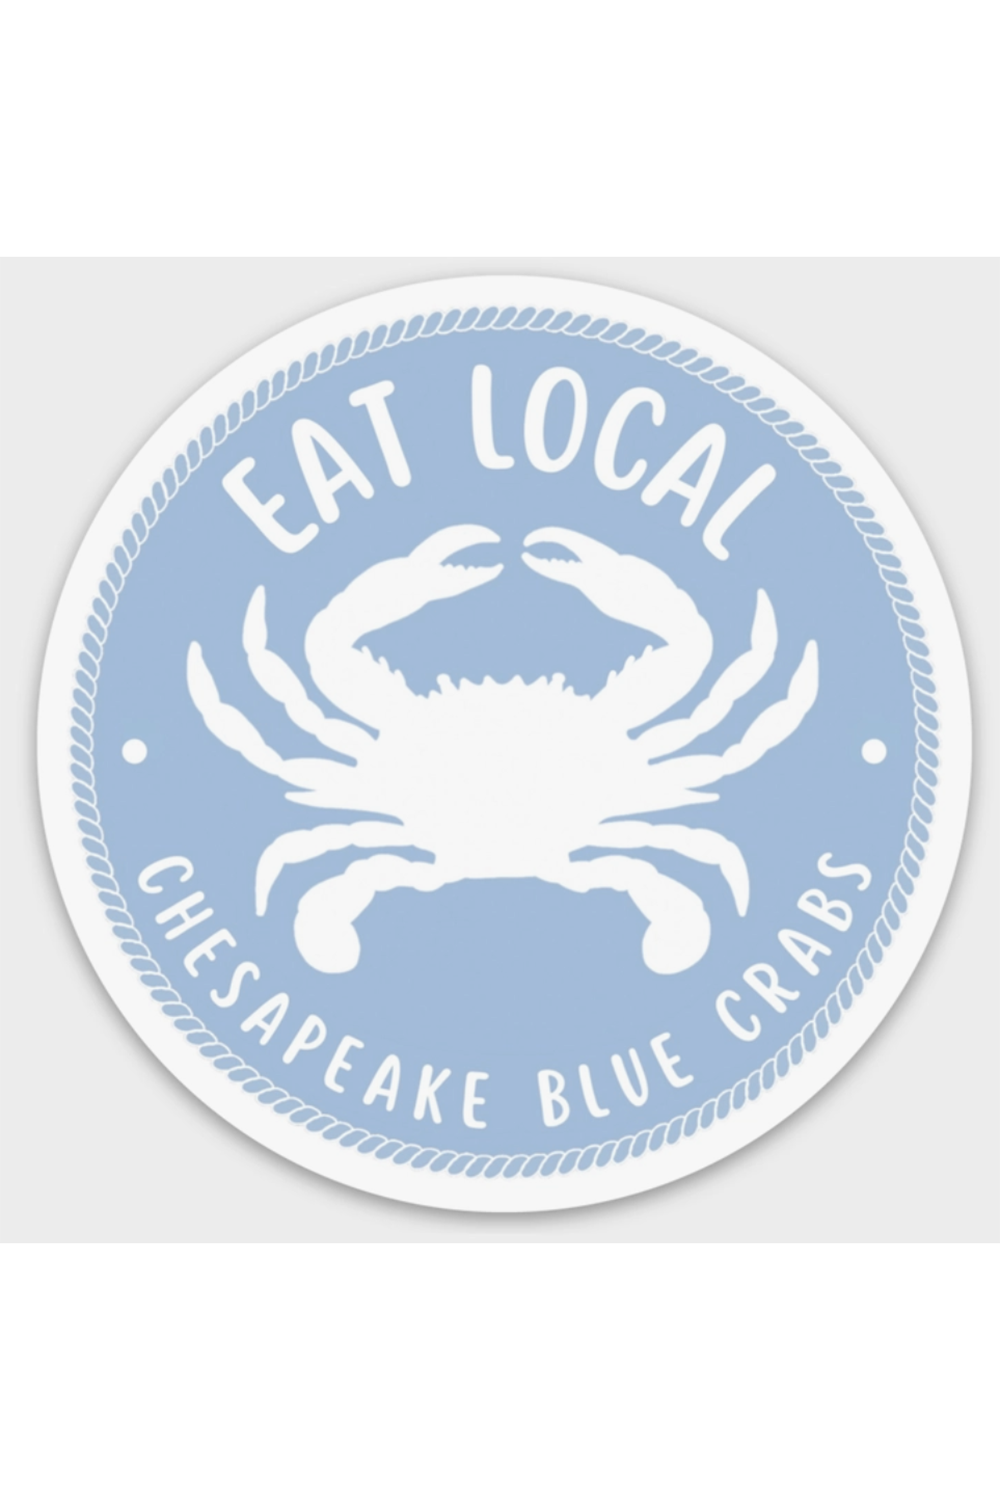 Trendy Sticker - Eat Local Blue Crabs